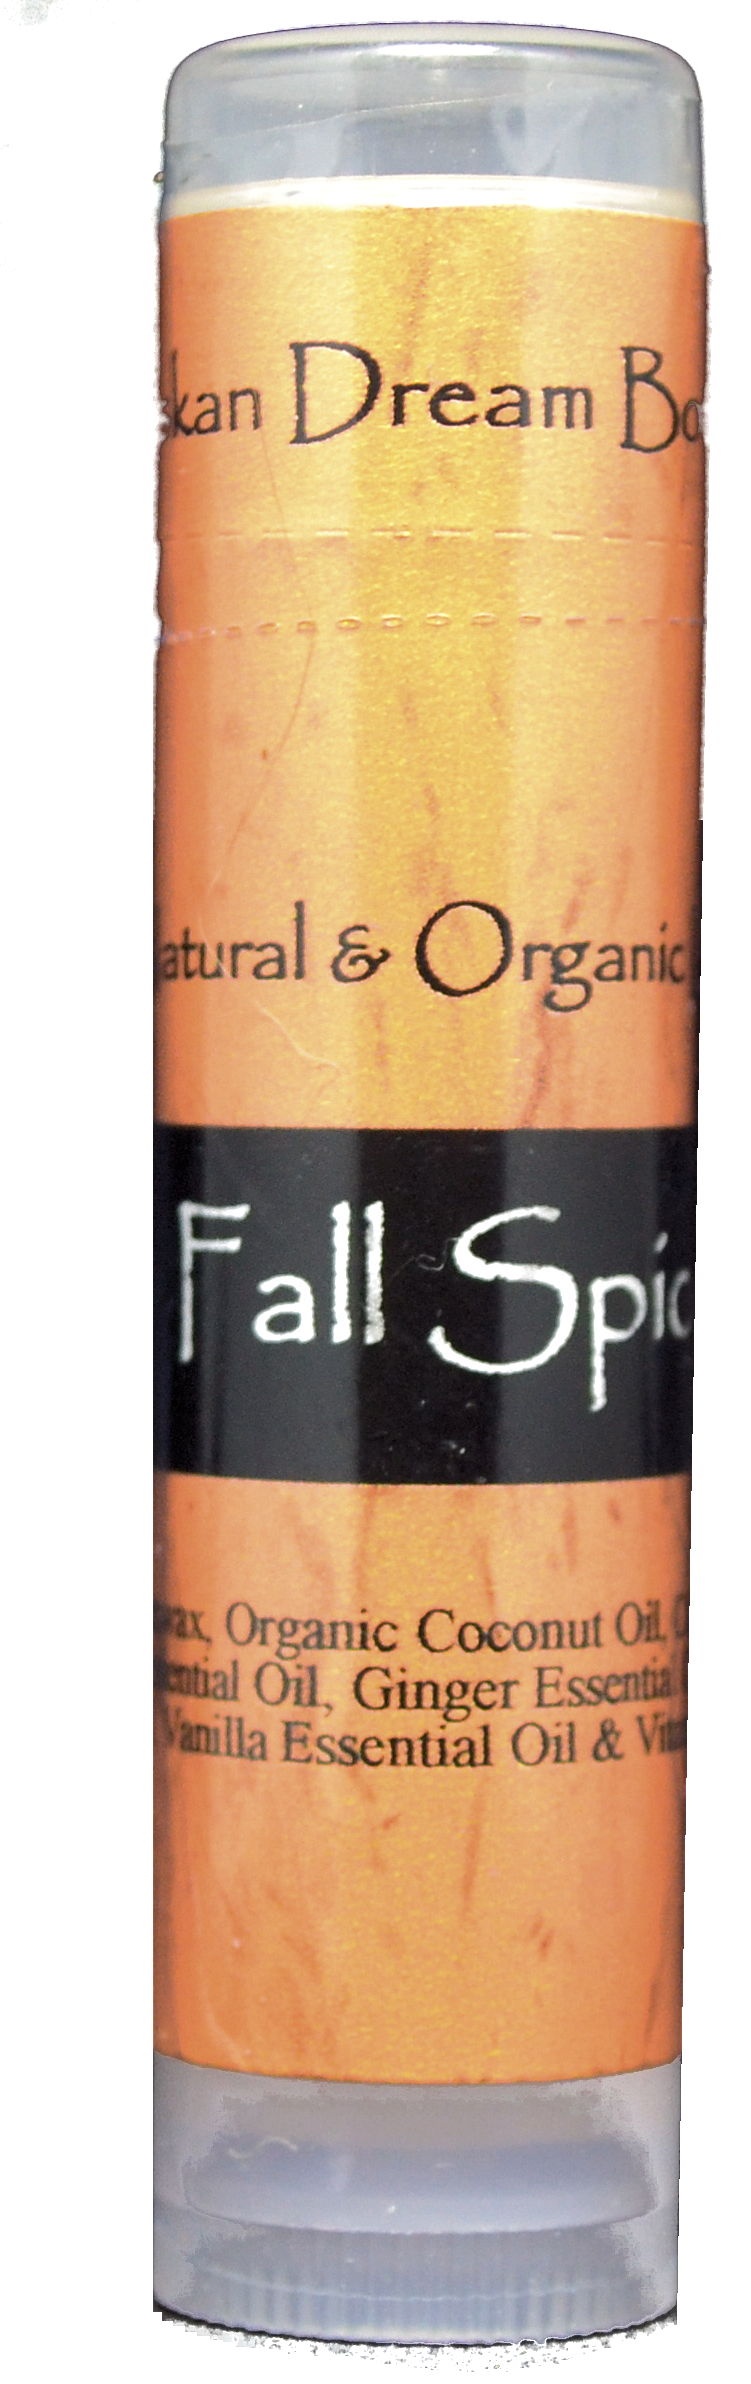 Fall Spice Spa Grade Lip Balm - Alaskan Dream Botanicals